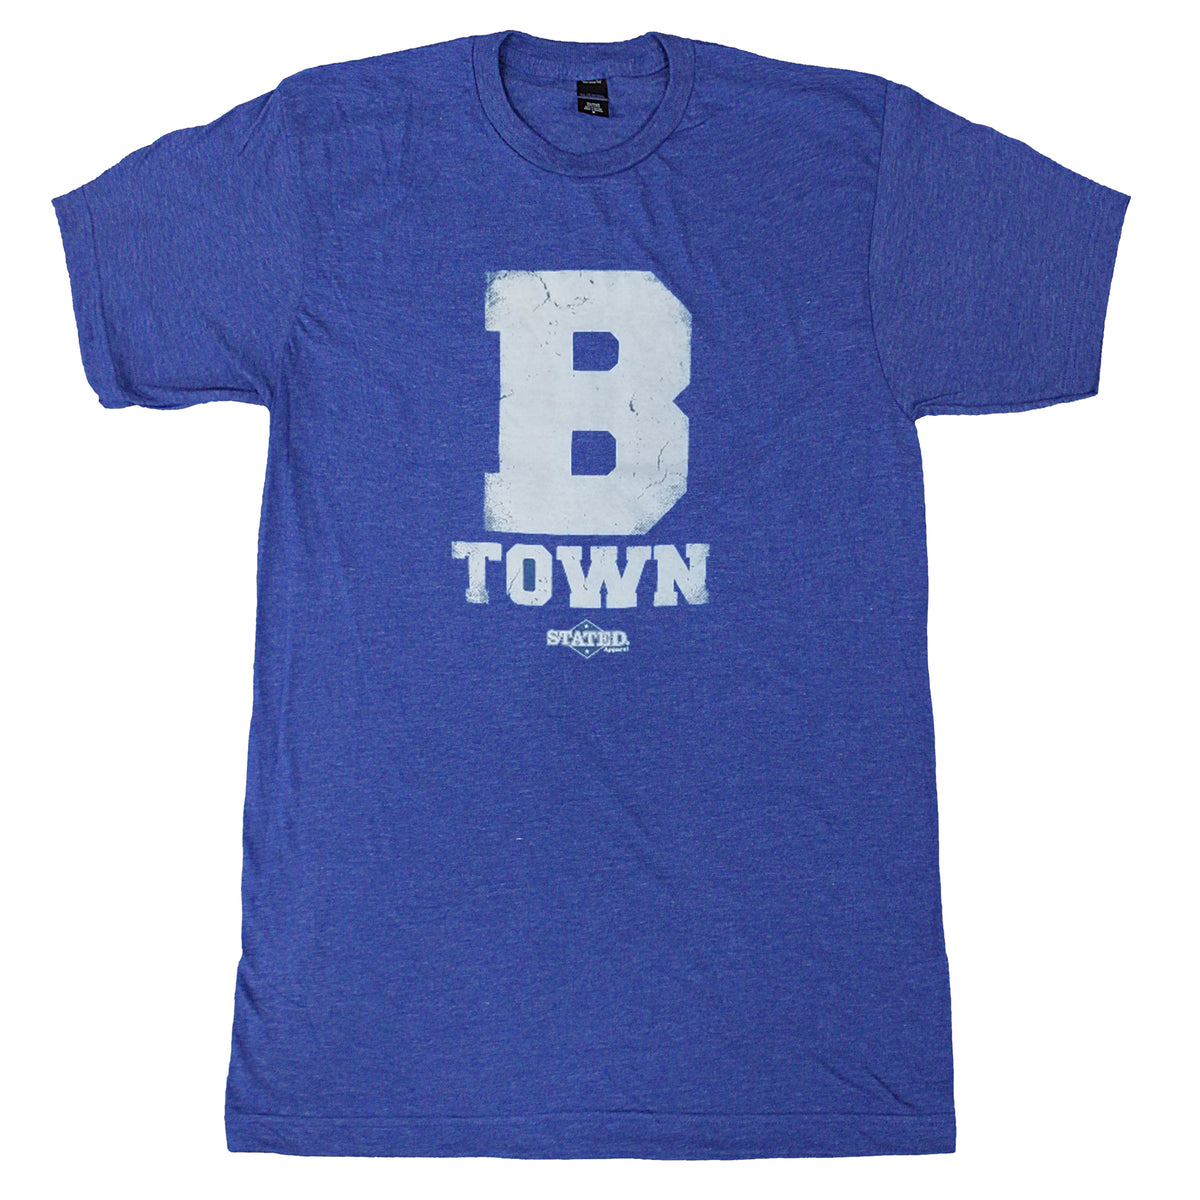 Bryant B Town tee